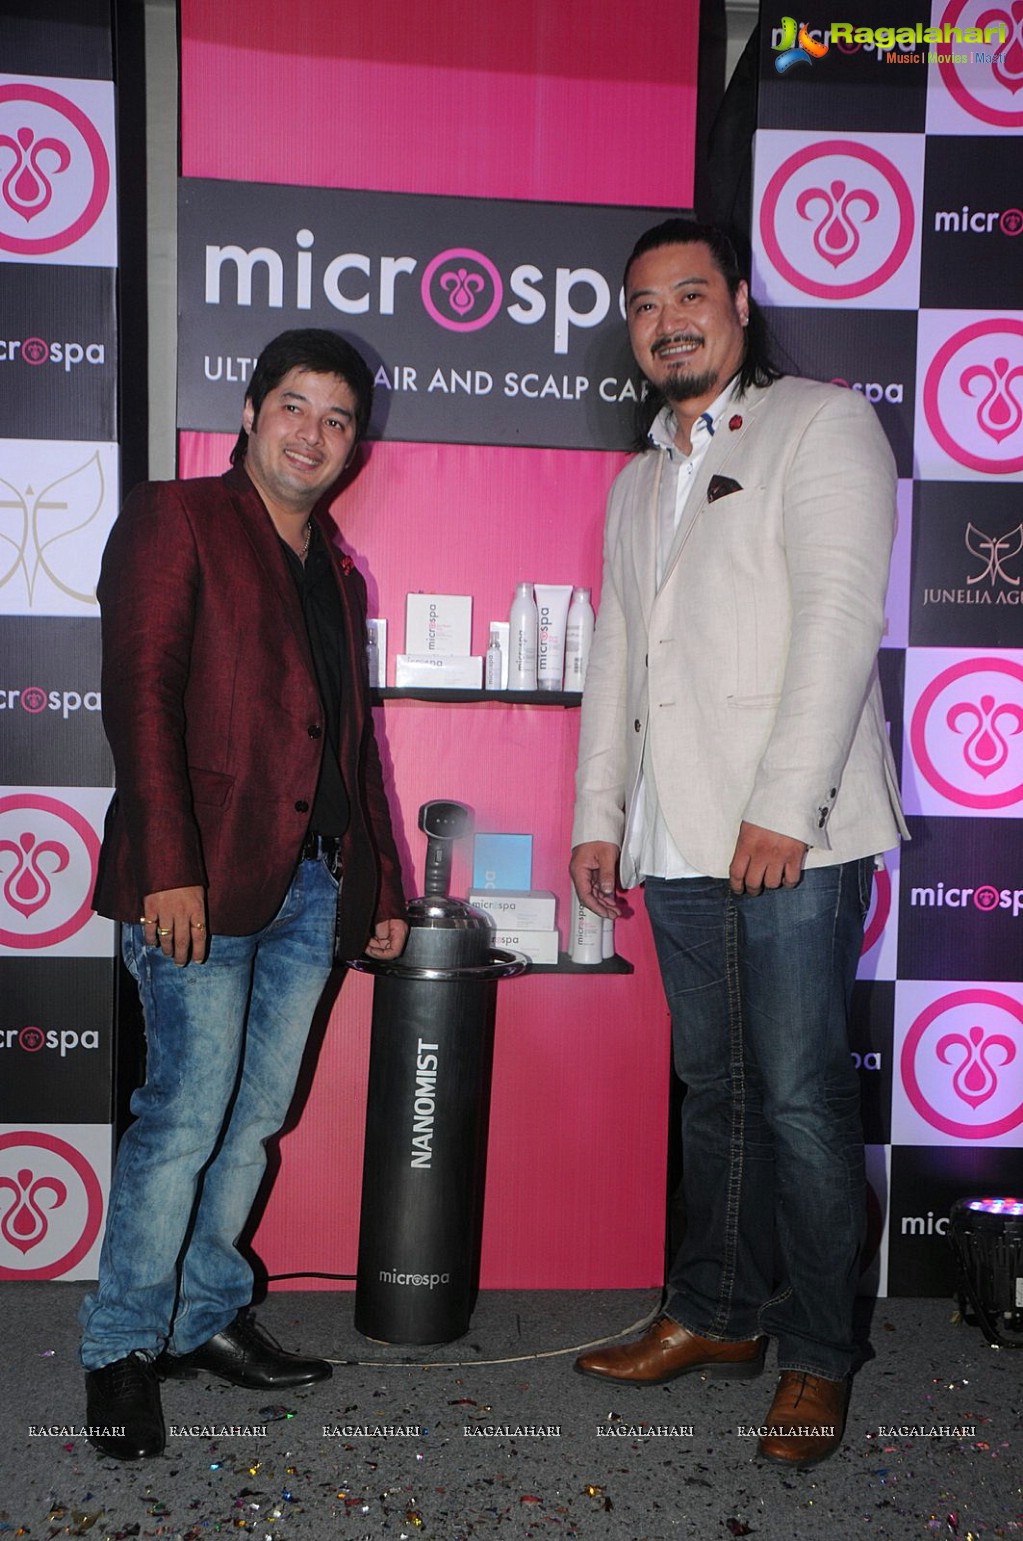 Microspa Launch in Mumbai